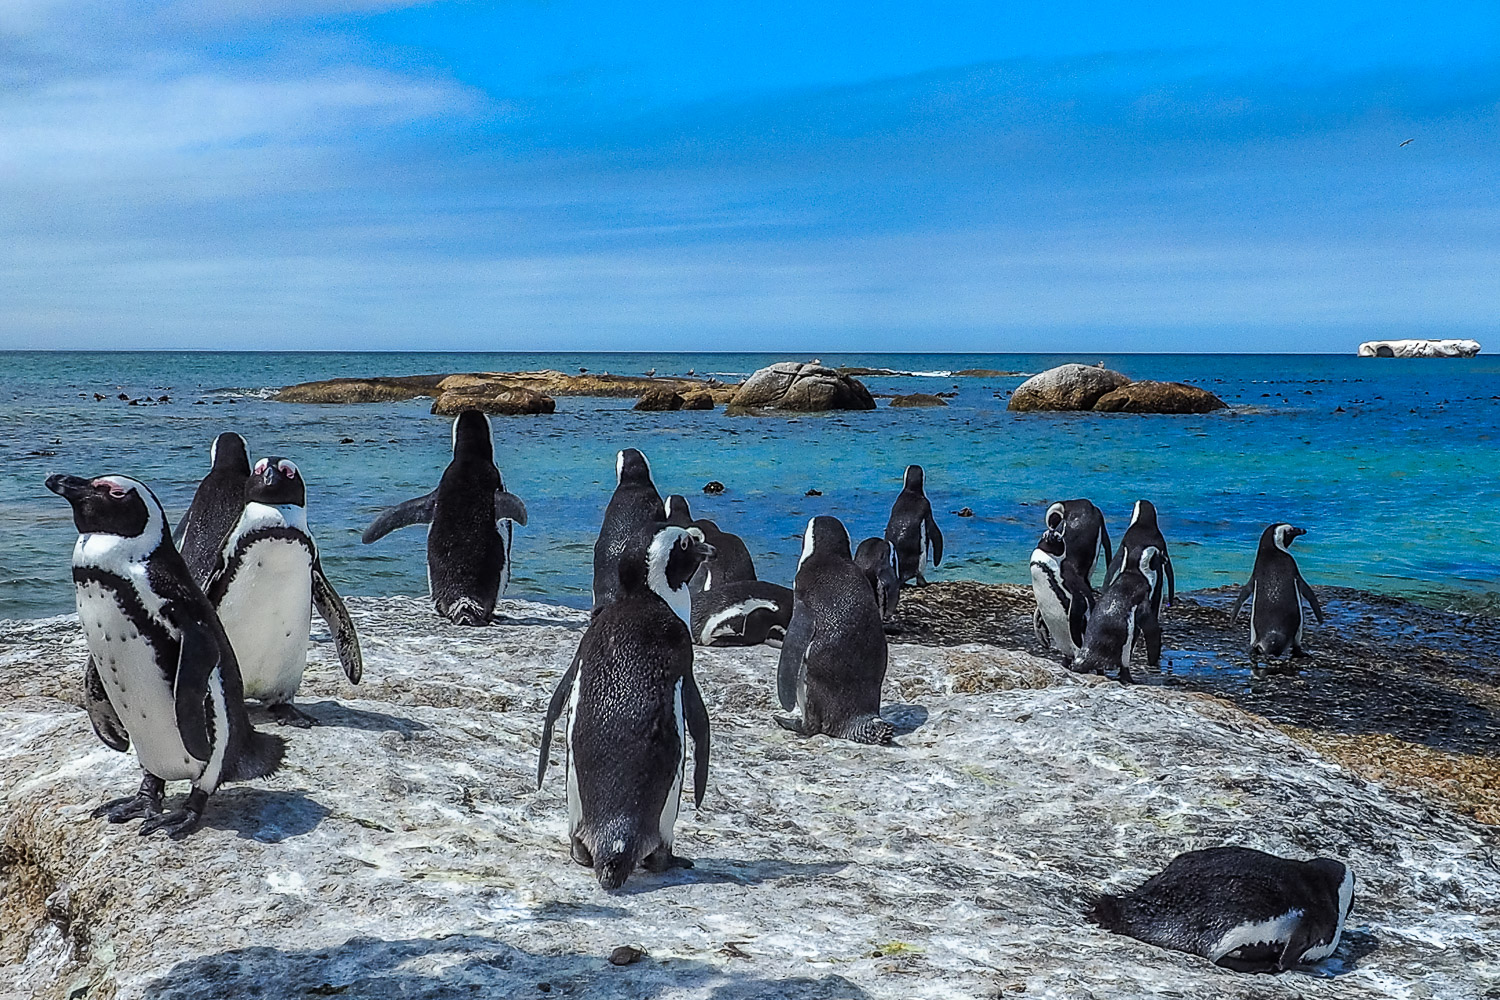 Penguins at Boulders Beach, Cape Peninsula, South Africa.